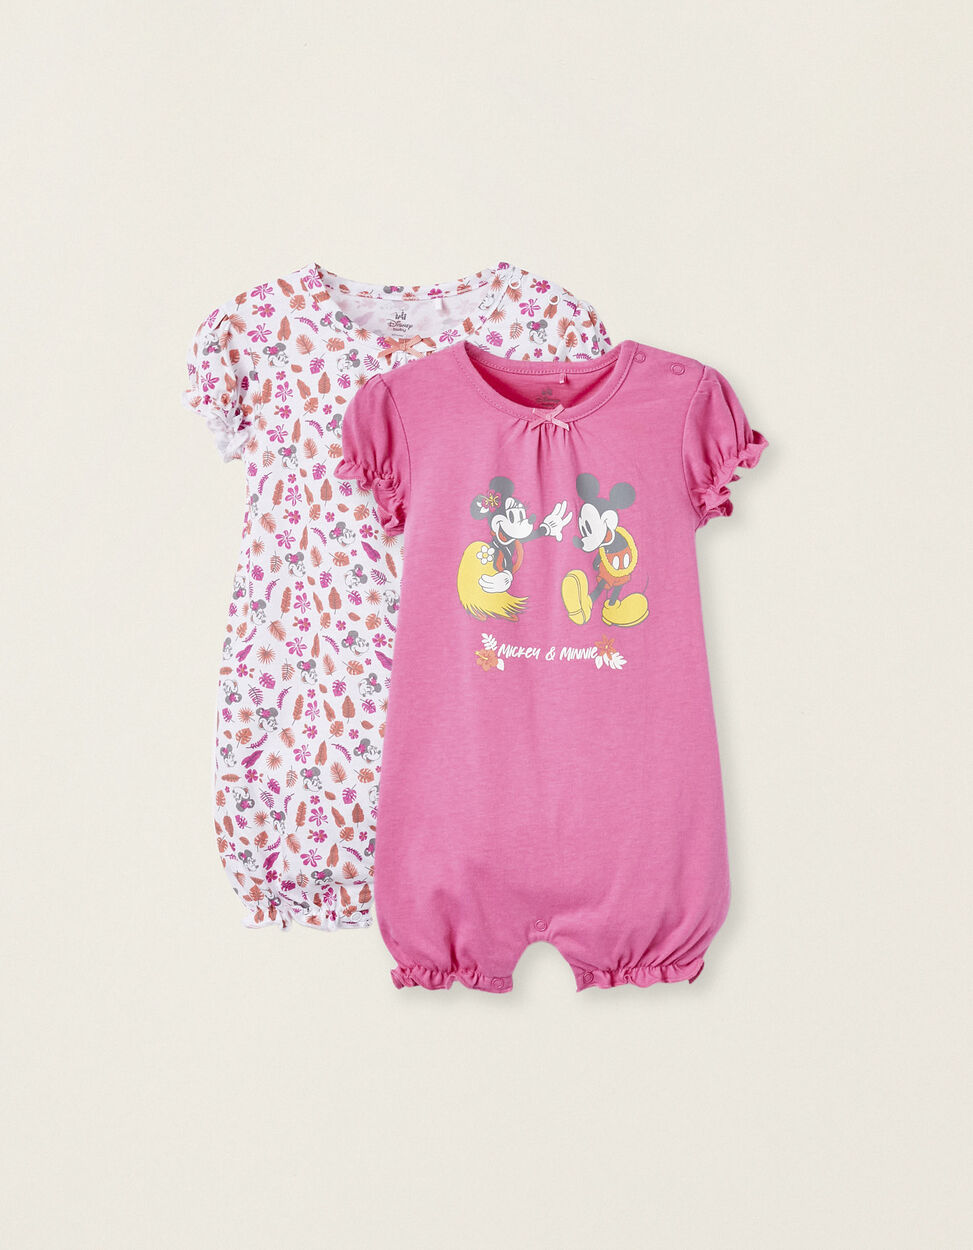 ZIPPY Online - Kids Clothing and Nursery